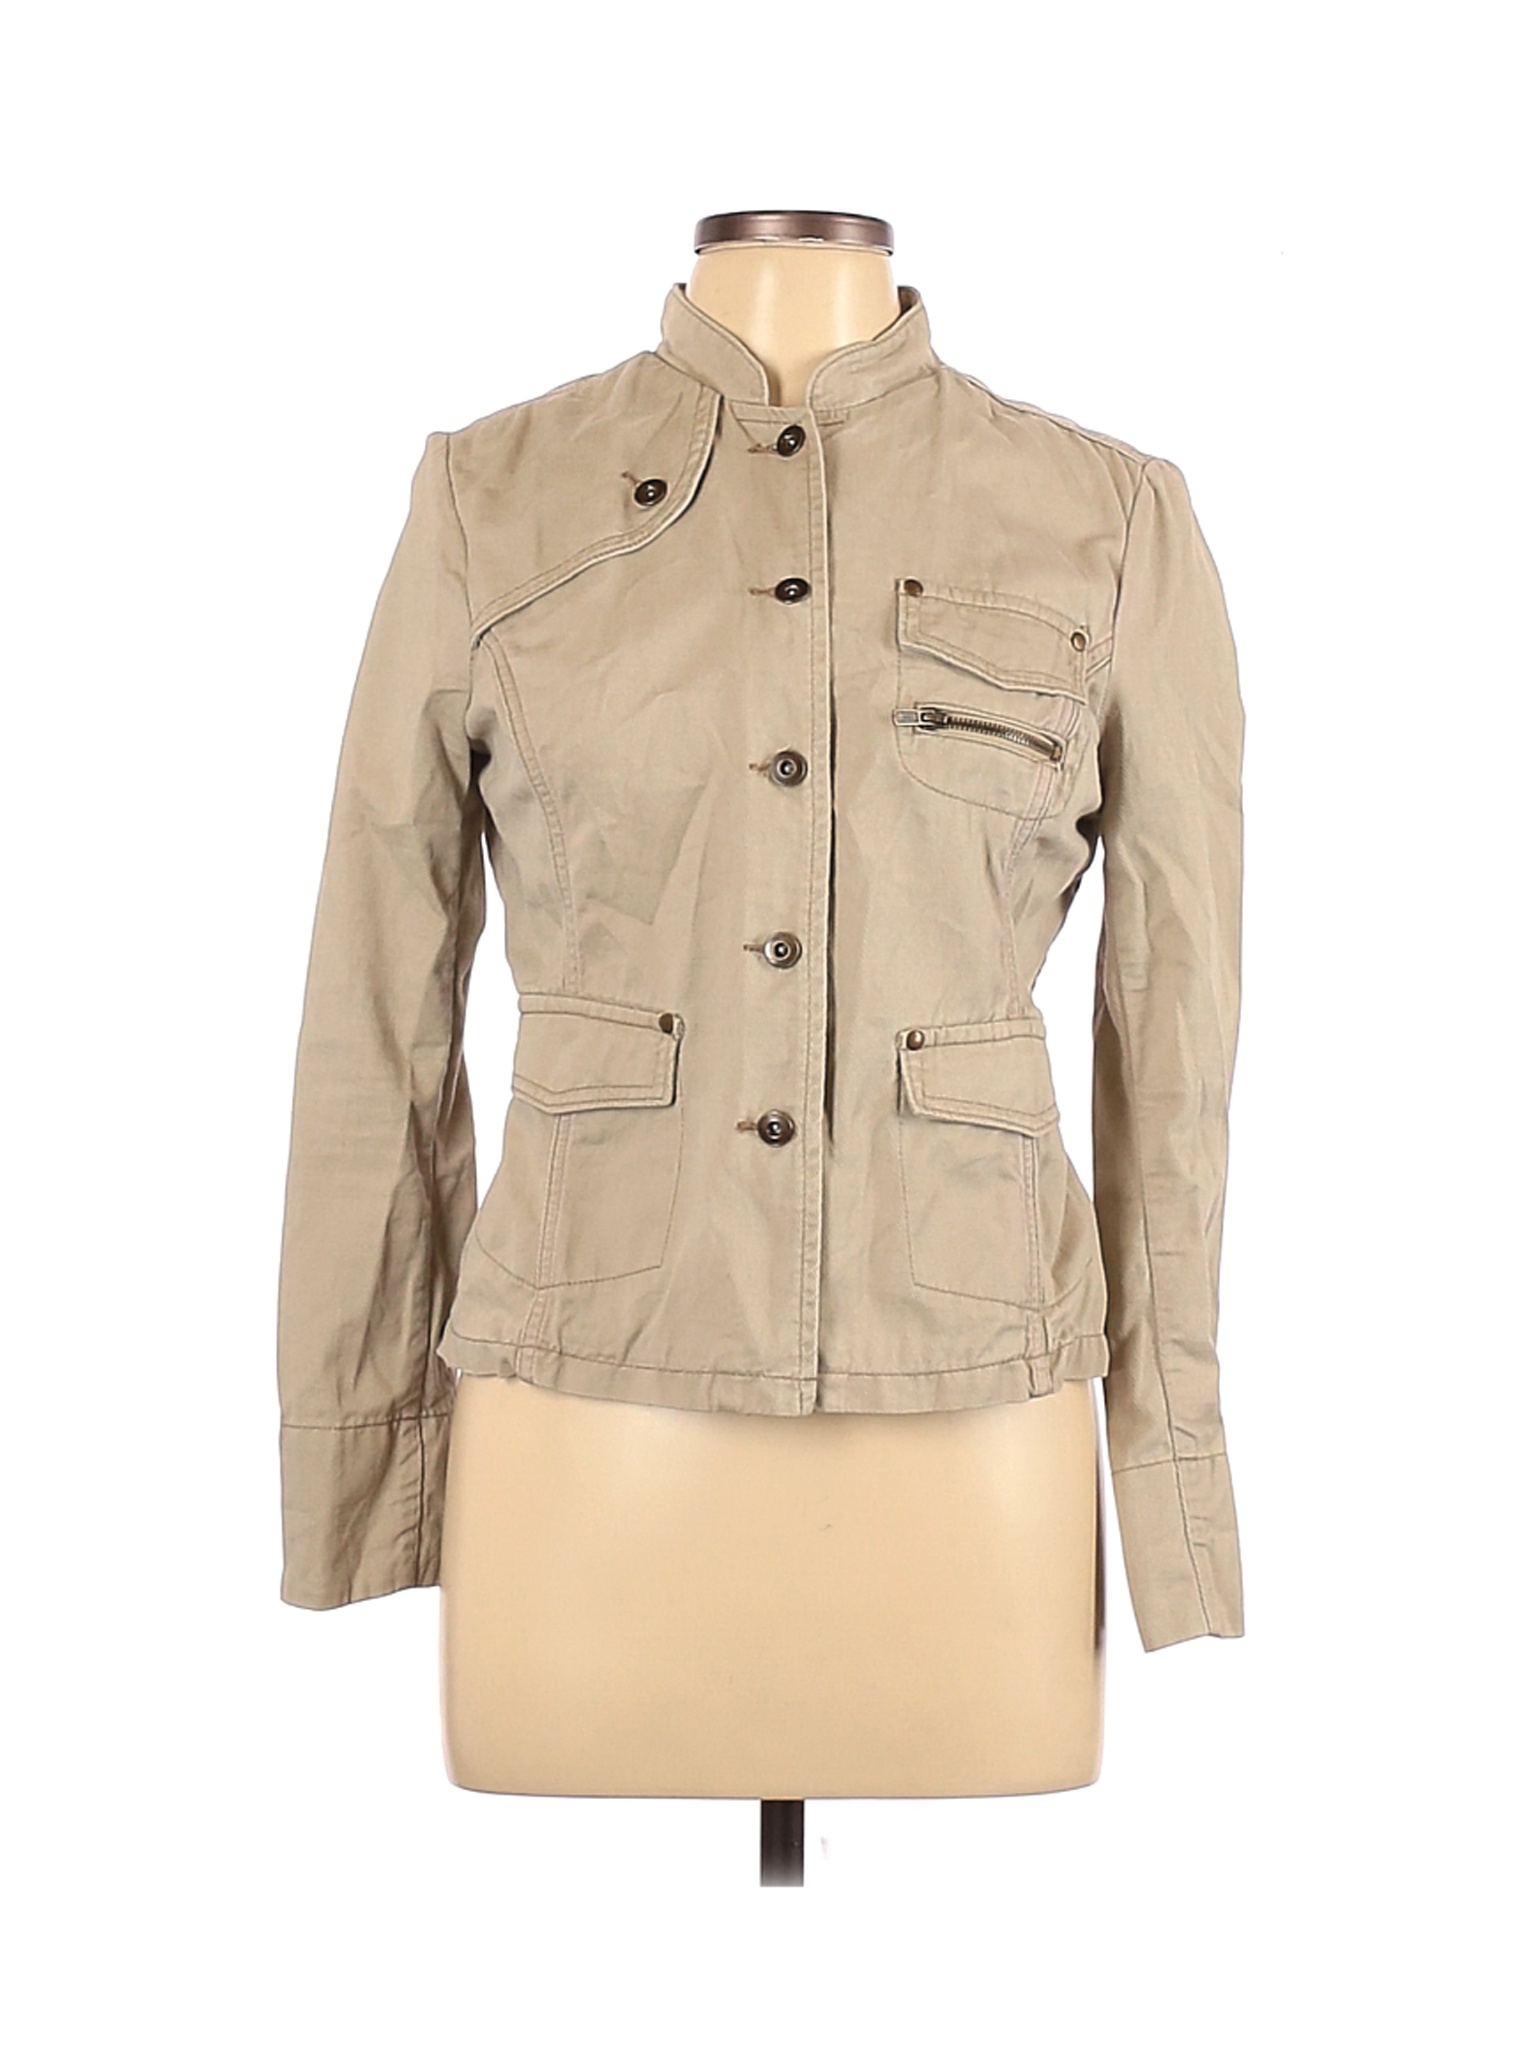 Mossimo Women Brown Jacket L | eBay